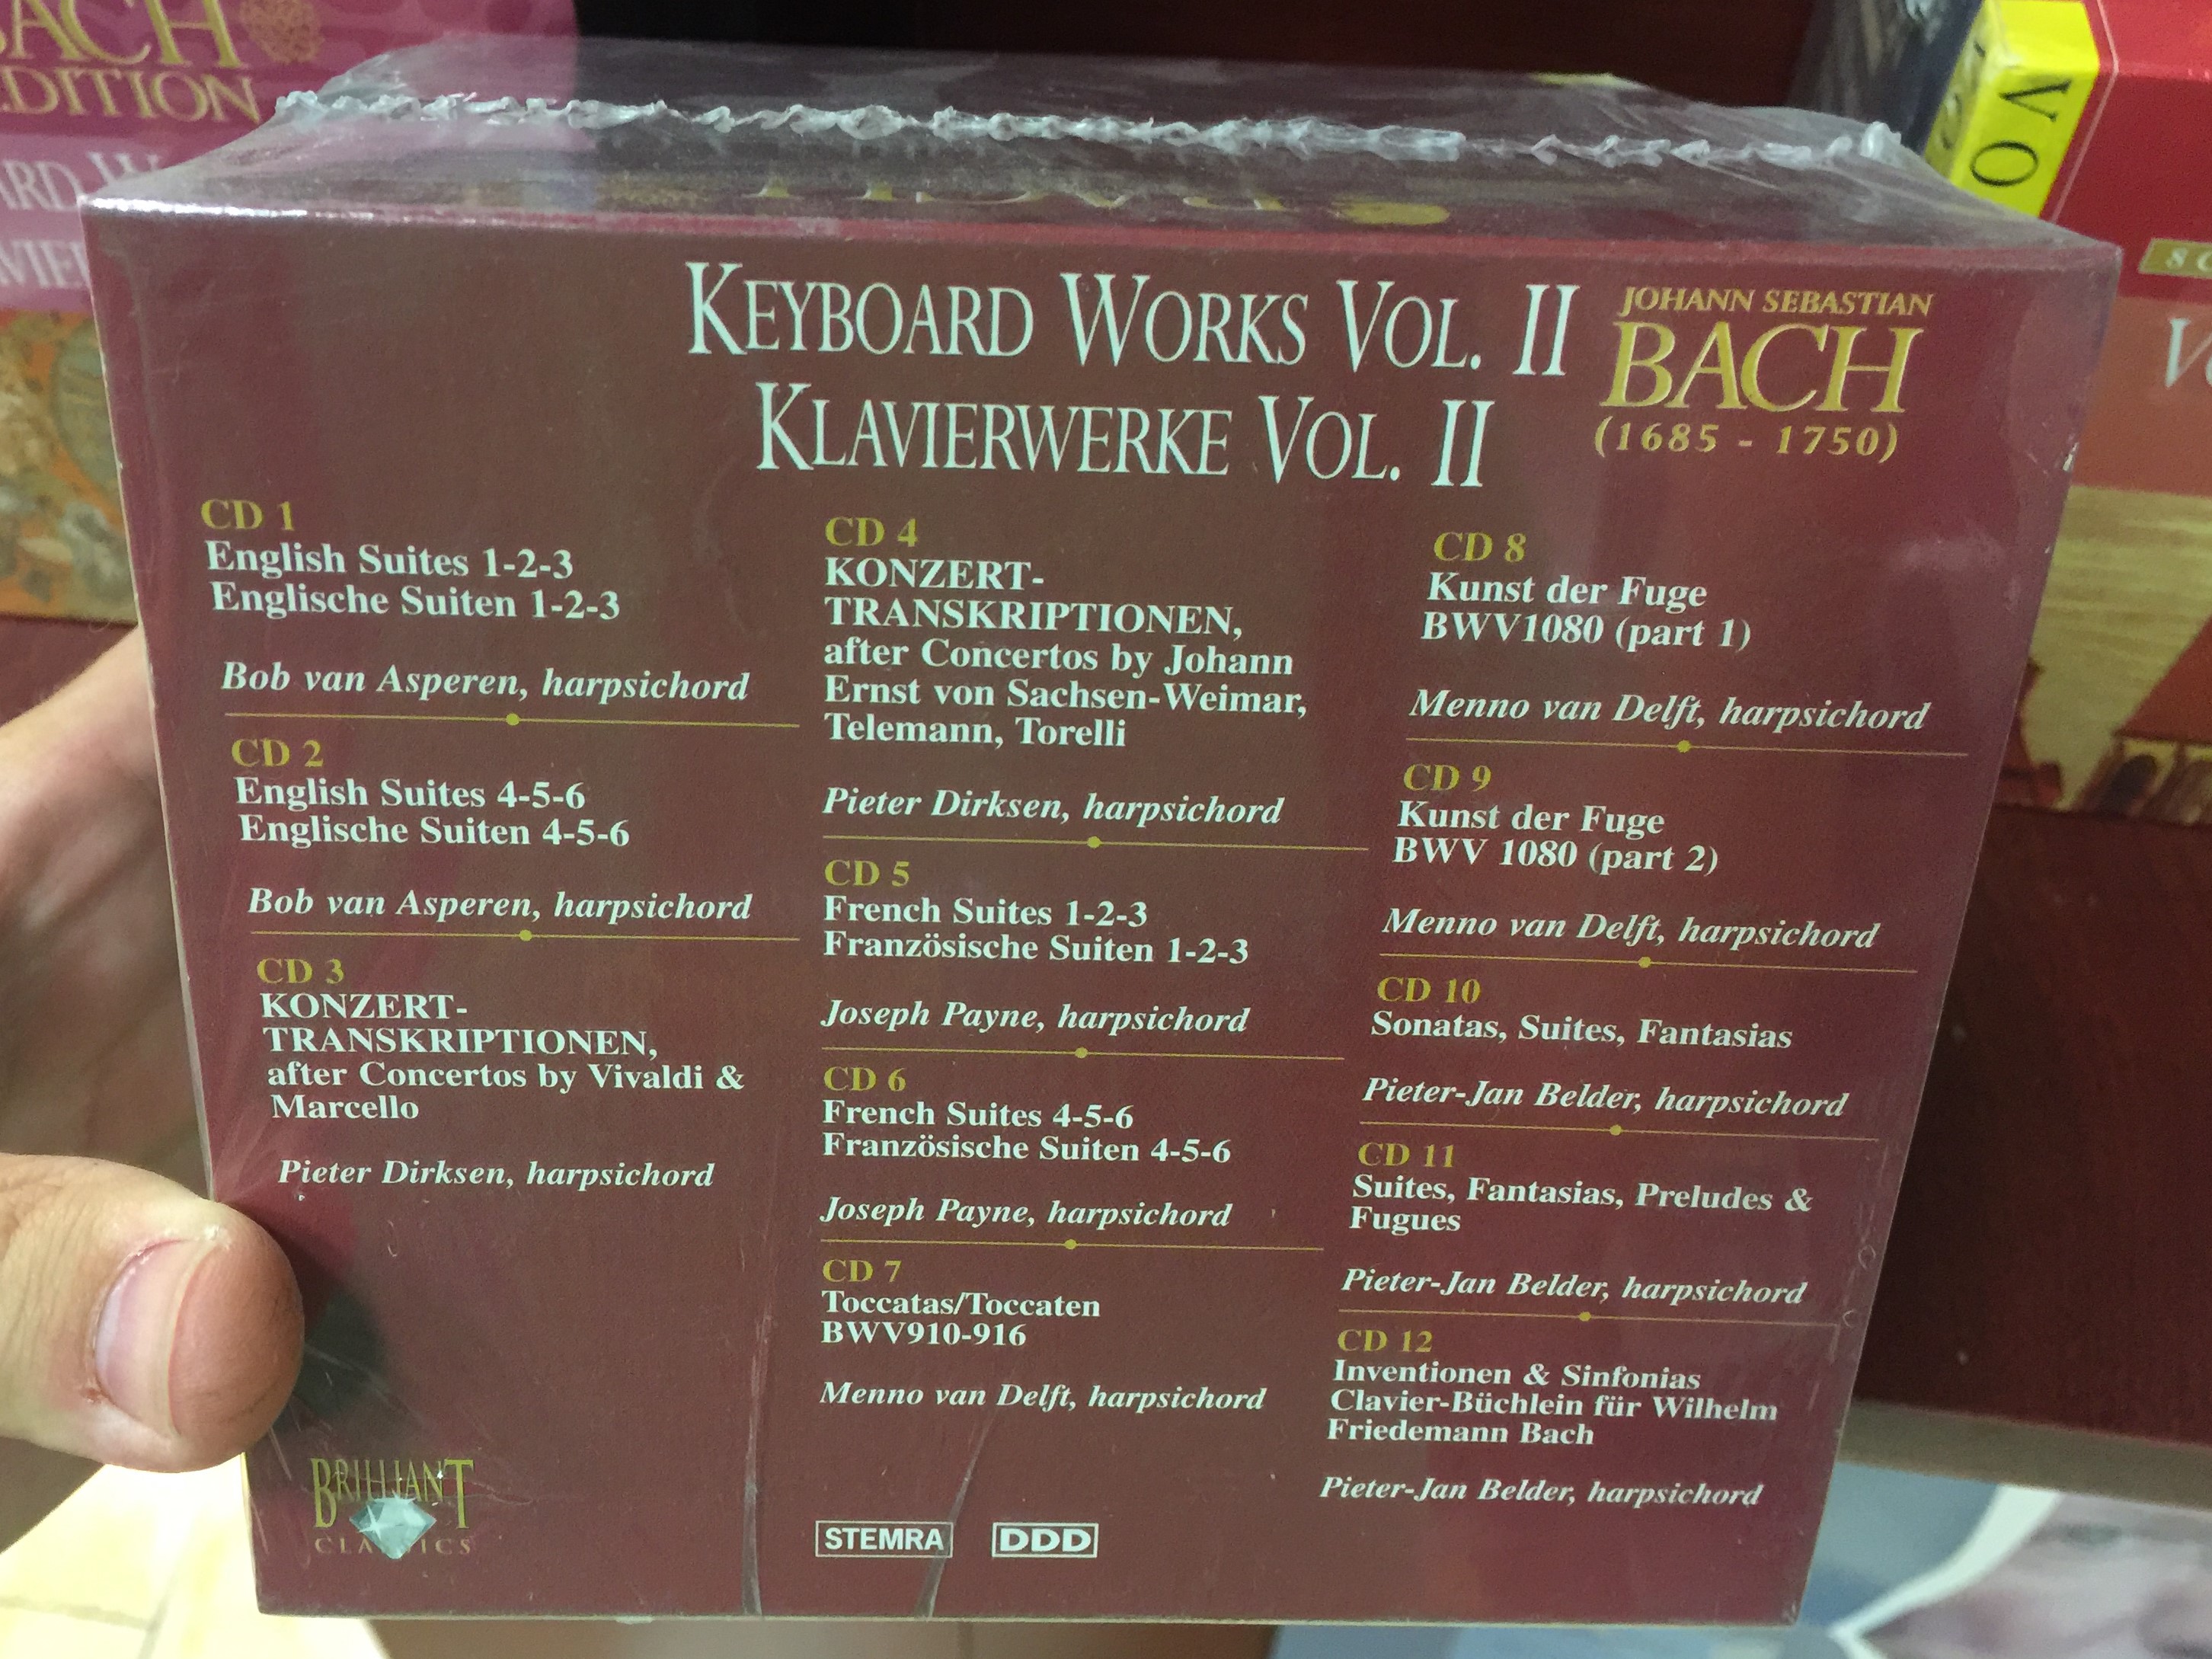 bach-edition-volume-13-keyboard-works-vol.-ii-klavierwerke-vol.-ii-brilliant-classics-12x-audio-cd-box-set-99372-4-.jpg